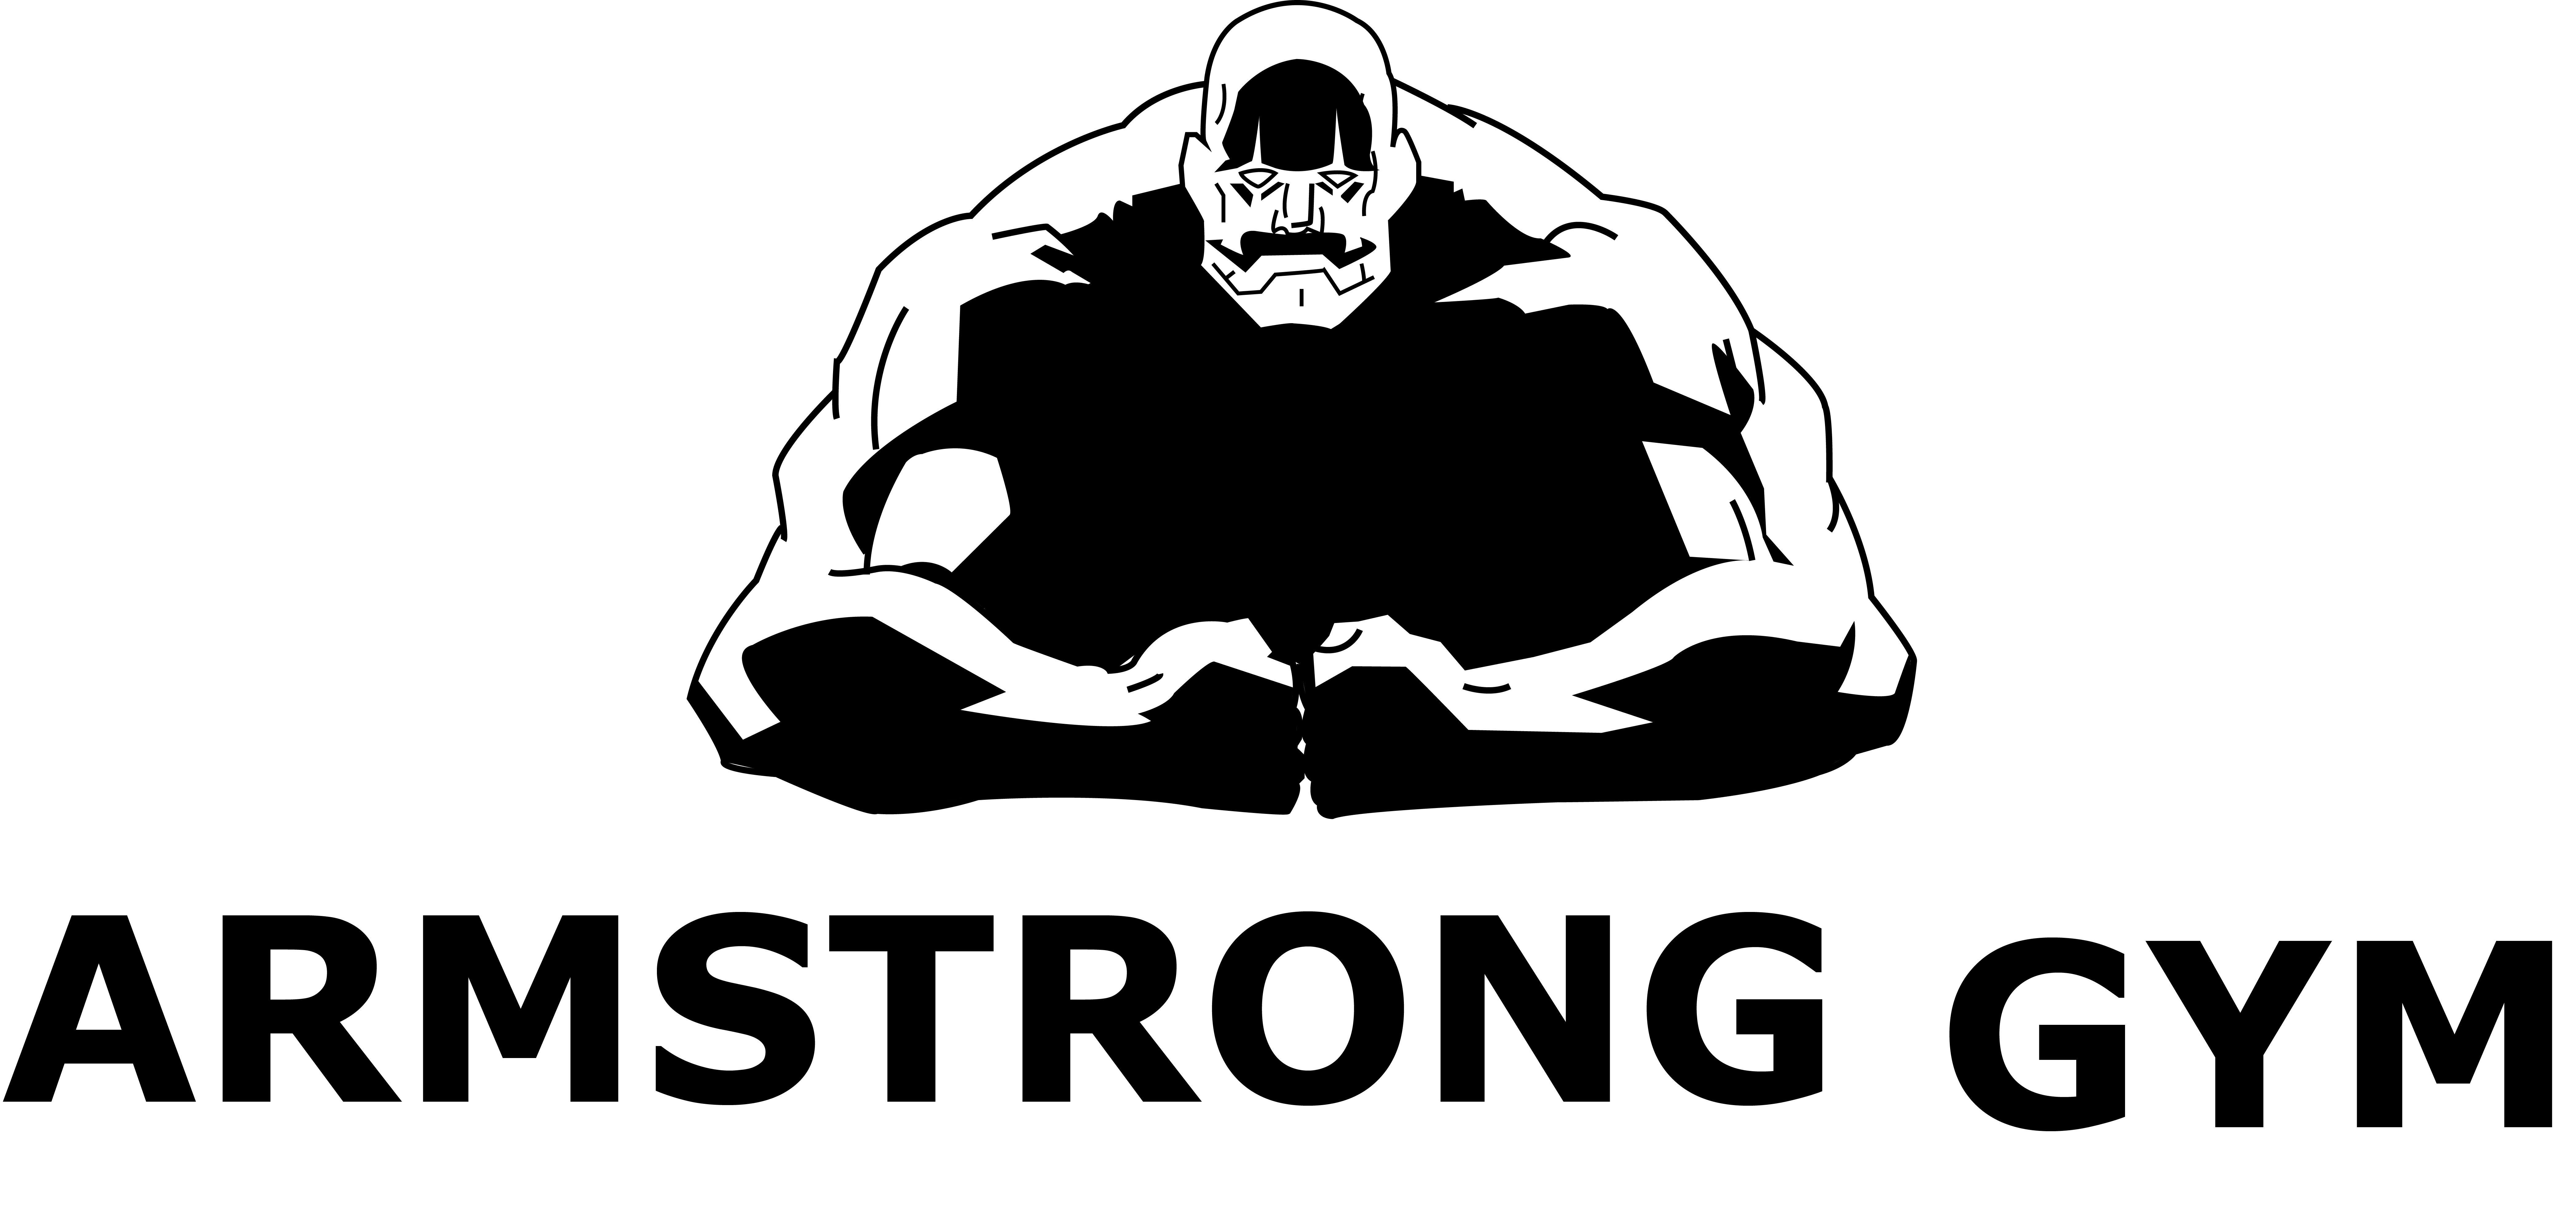 Armstrong Logo - Armstrong gym